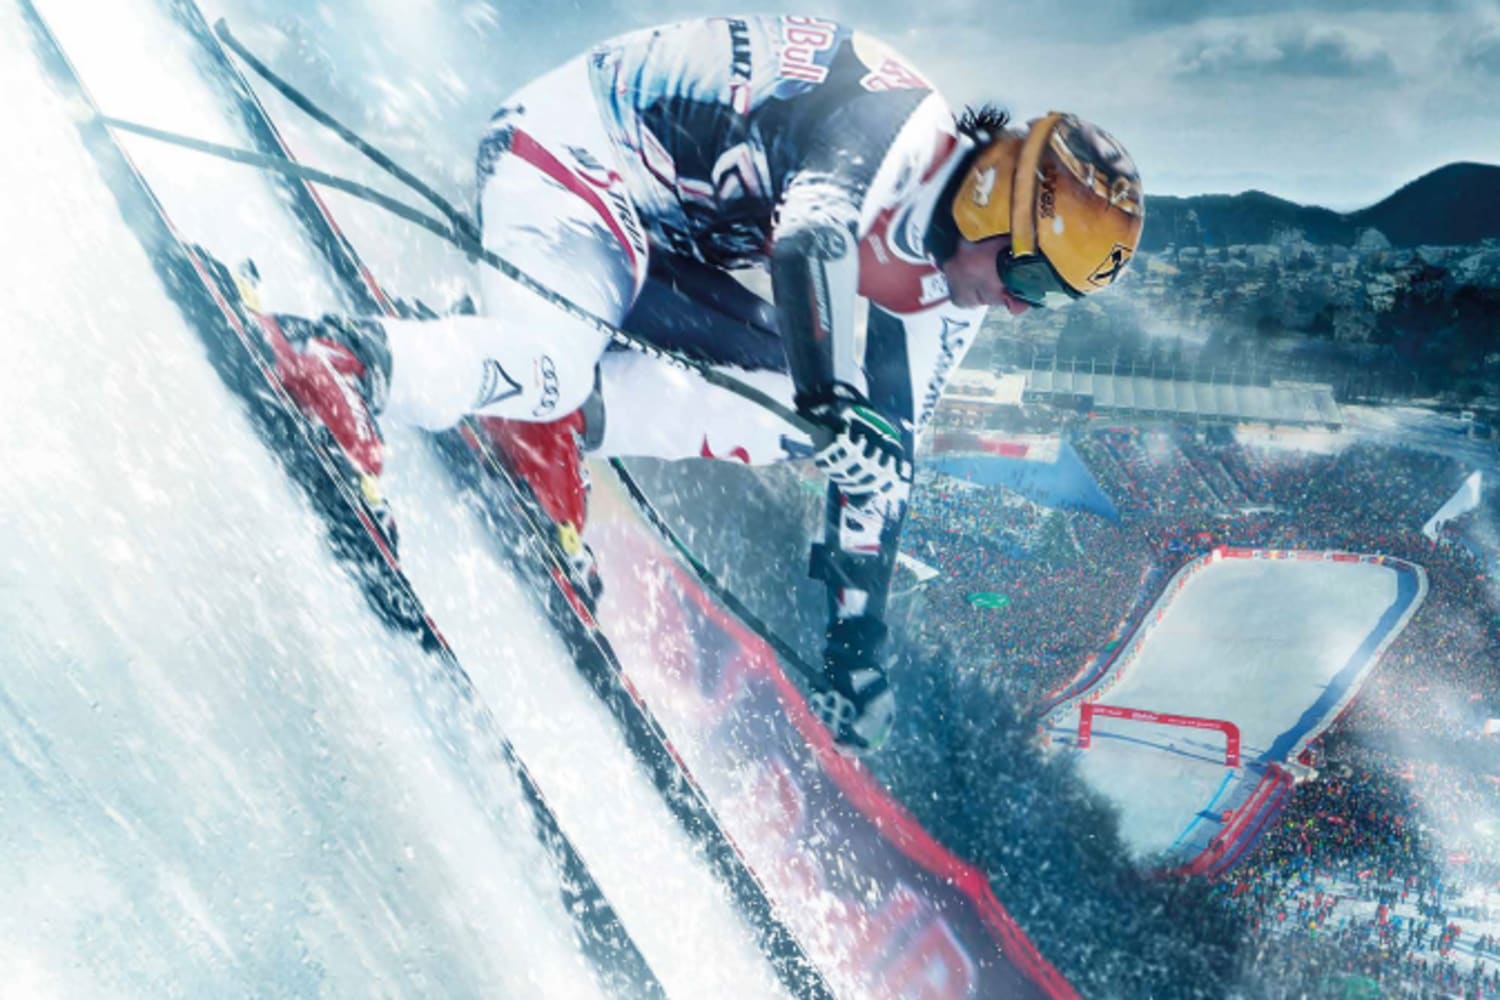 Streif Hahnenkamm ski race documentary on Red Bull TV